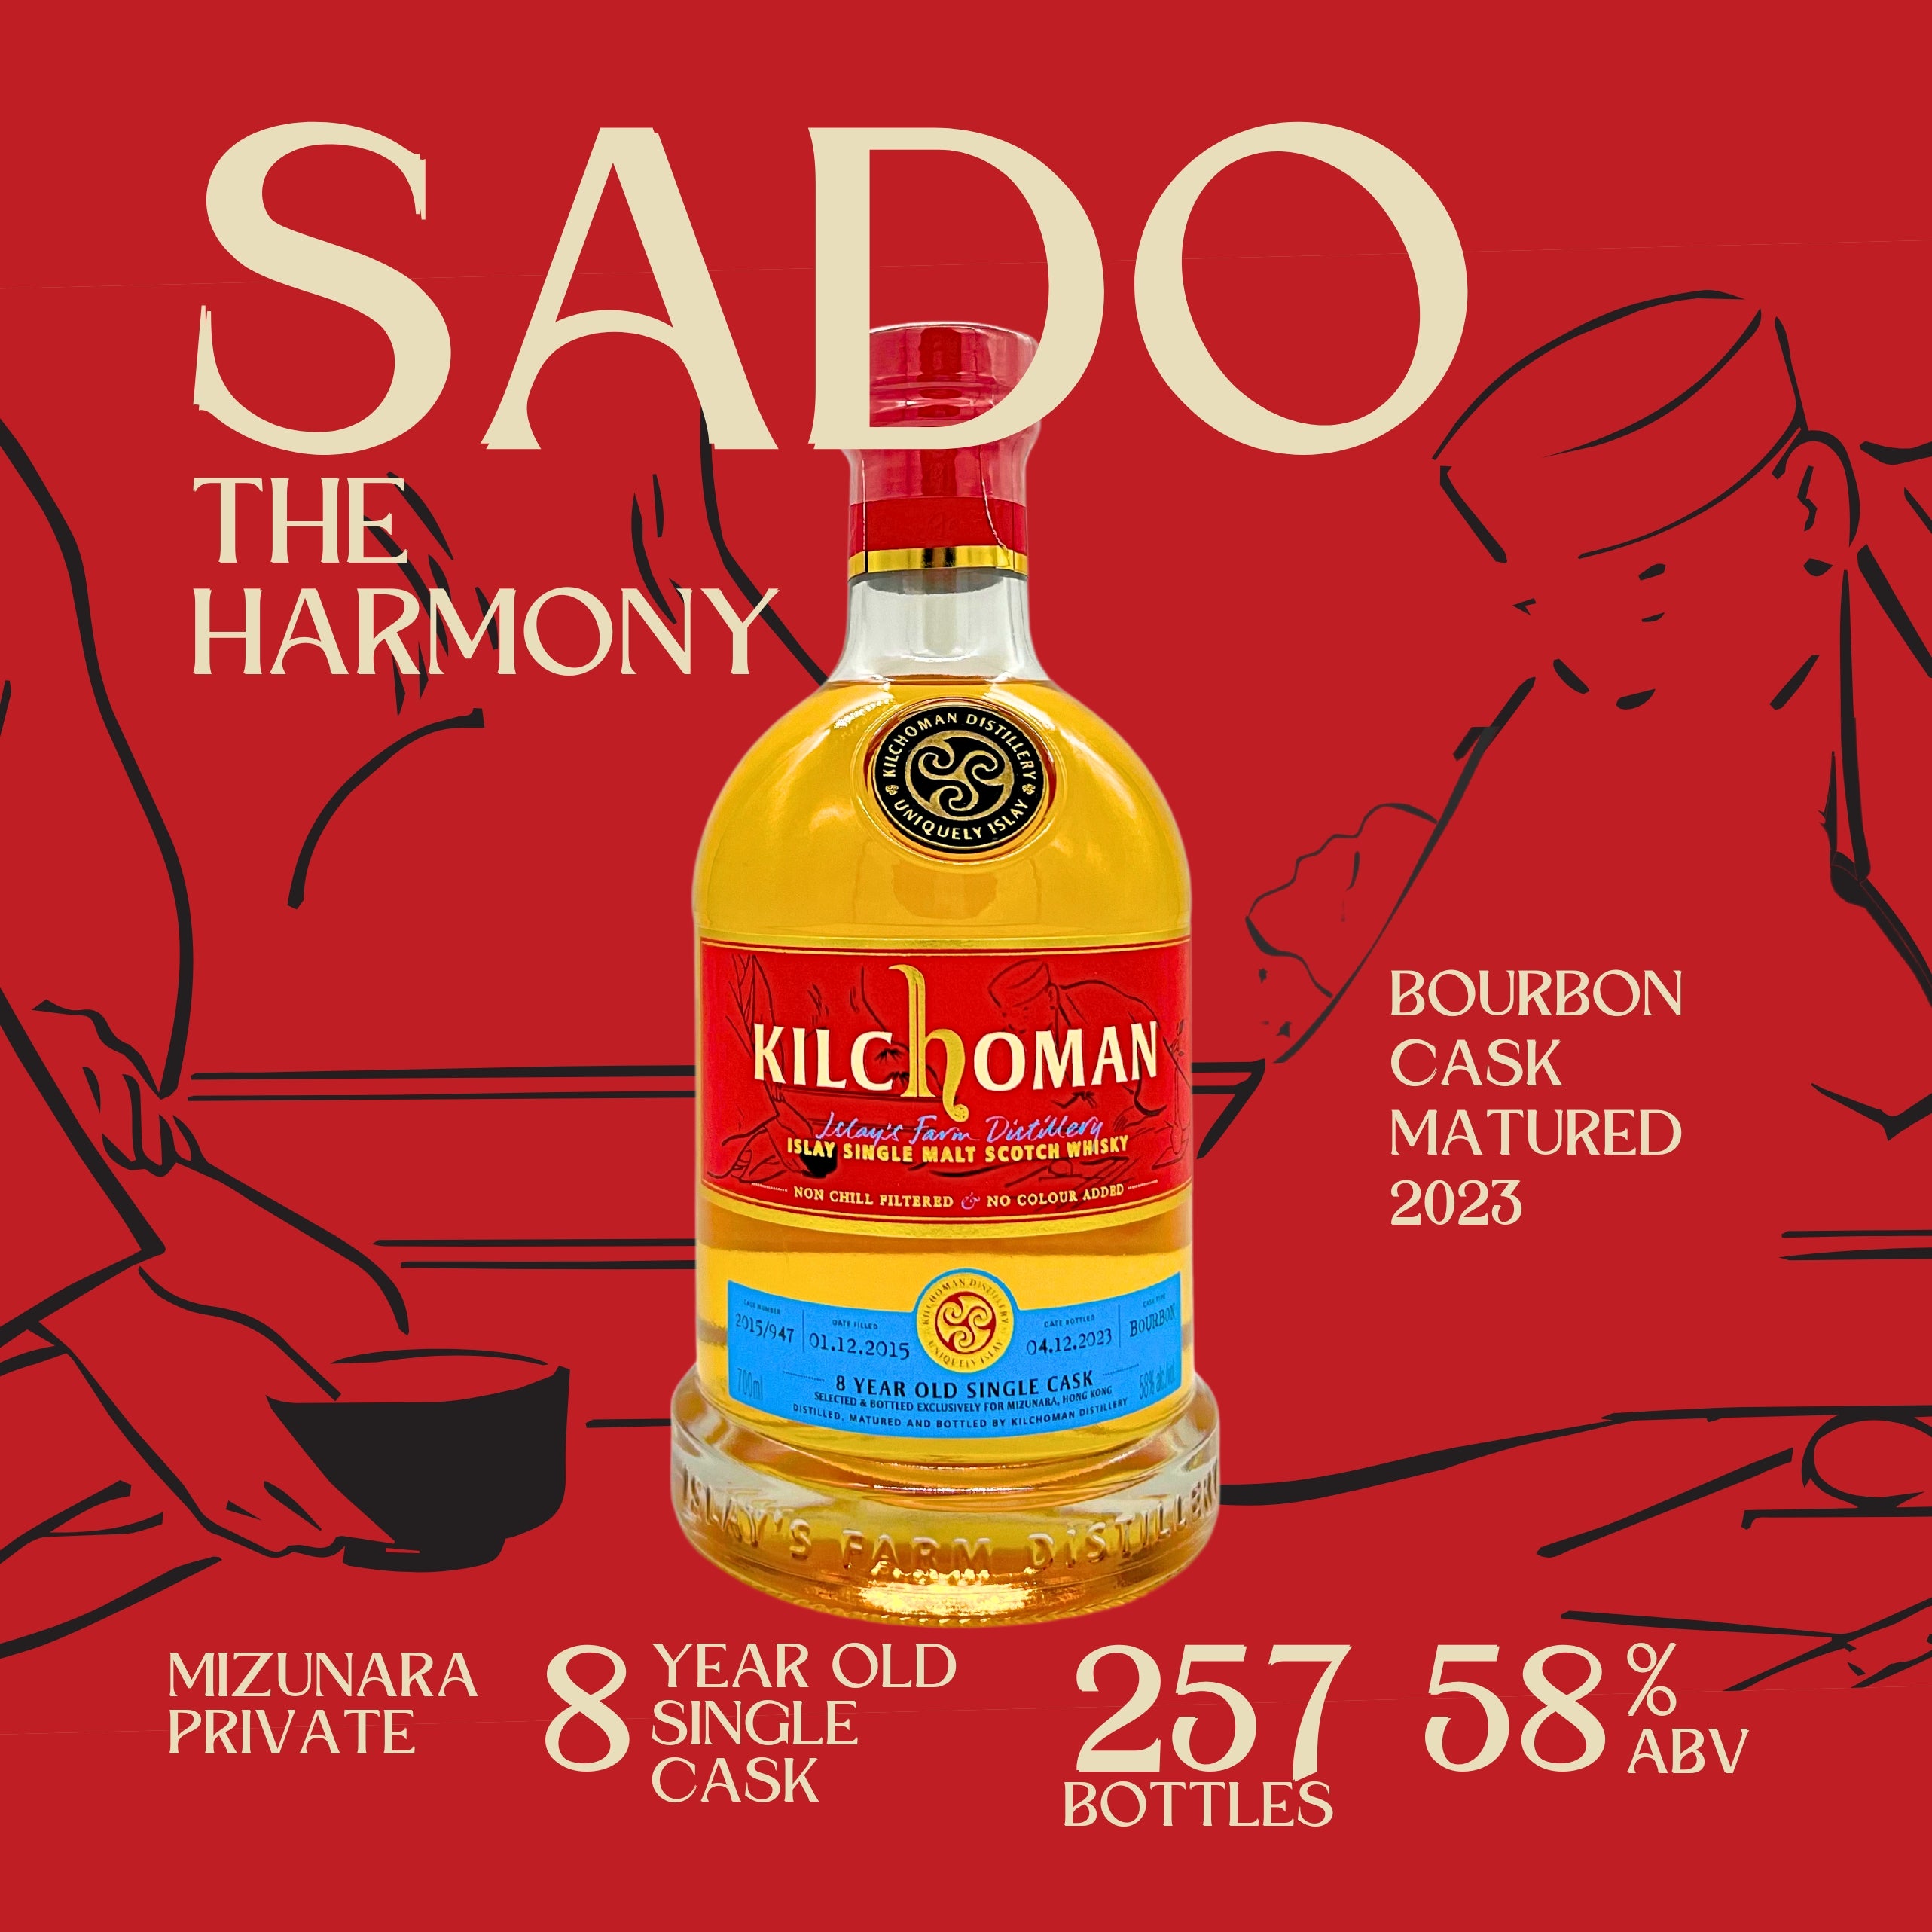 Kilchoman Sado The Harmony